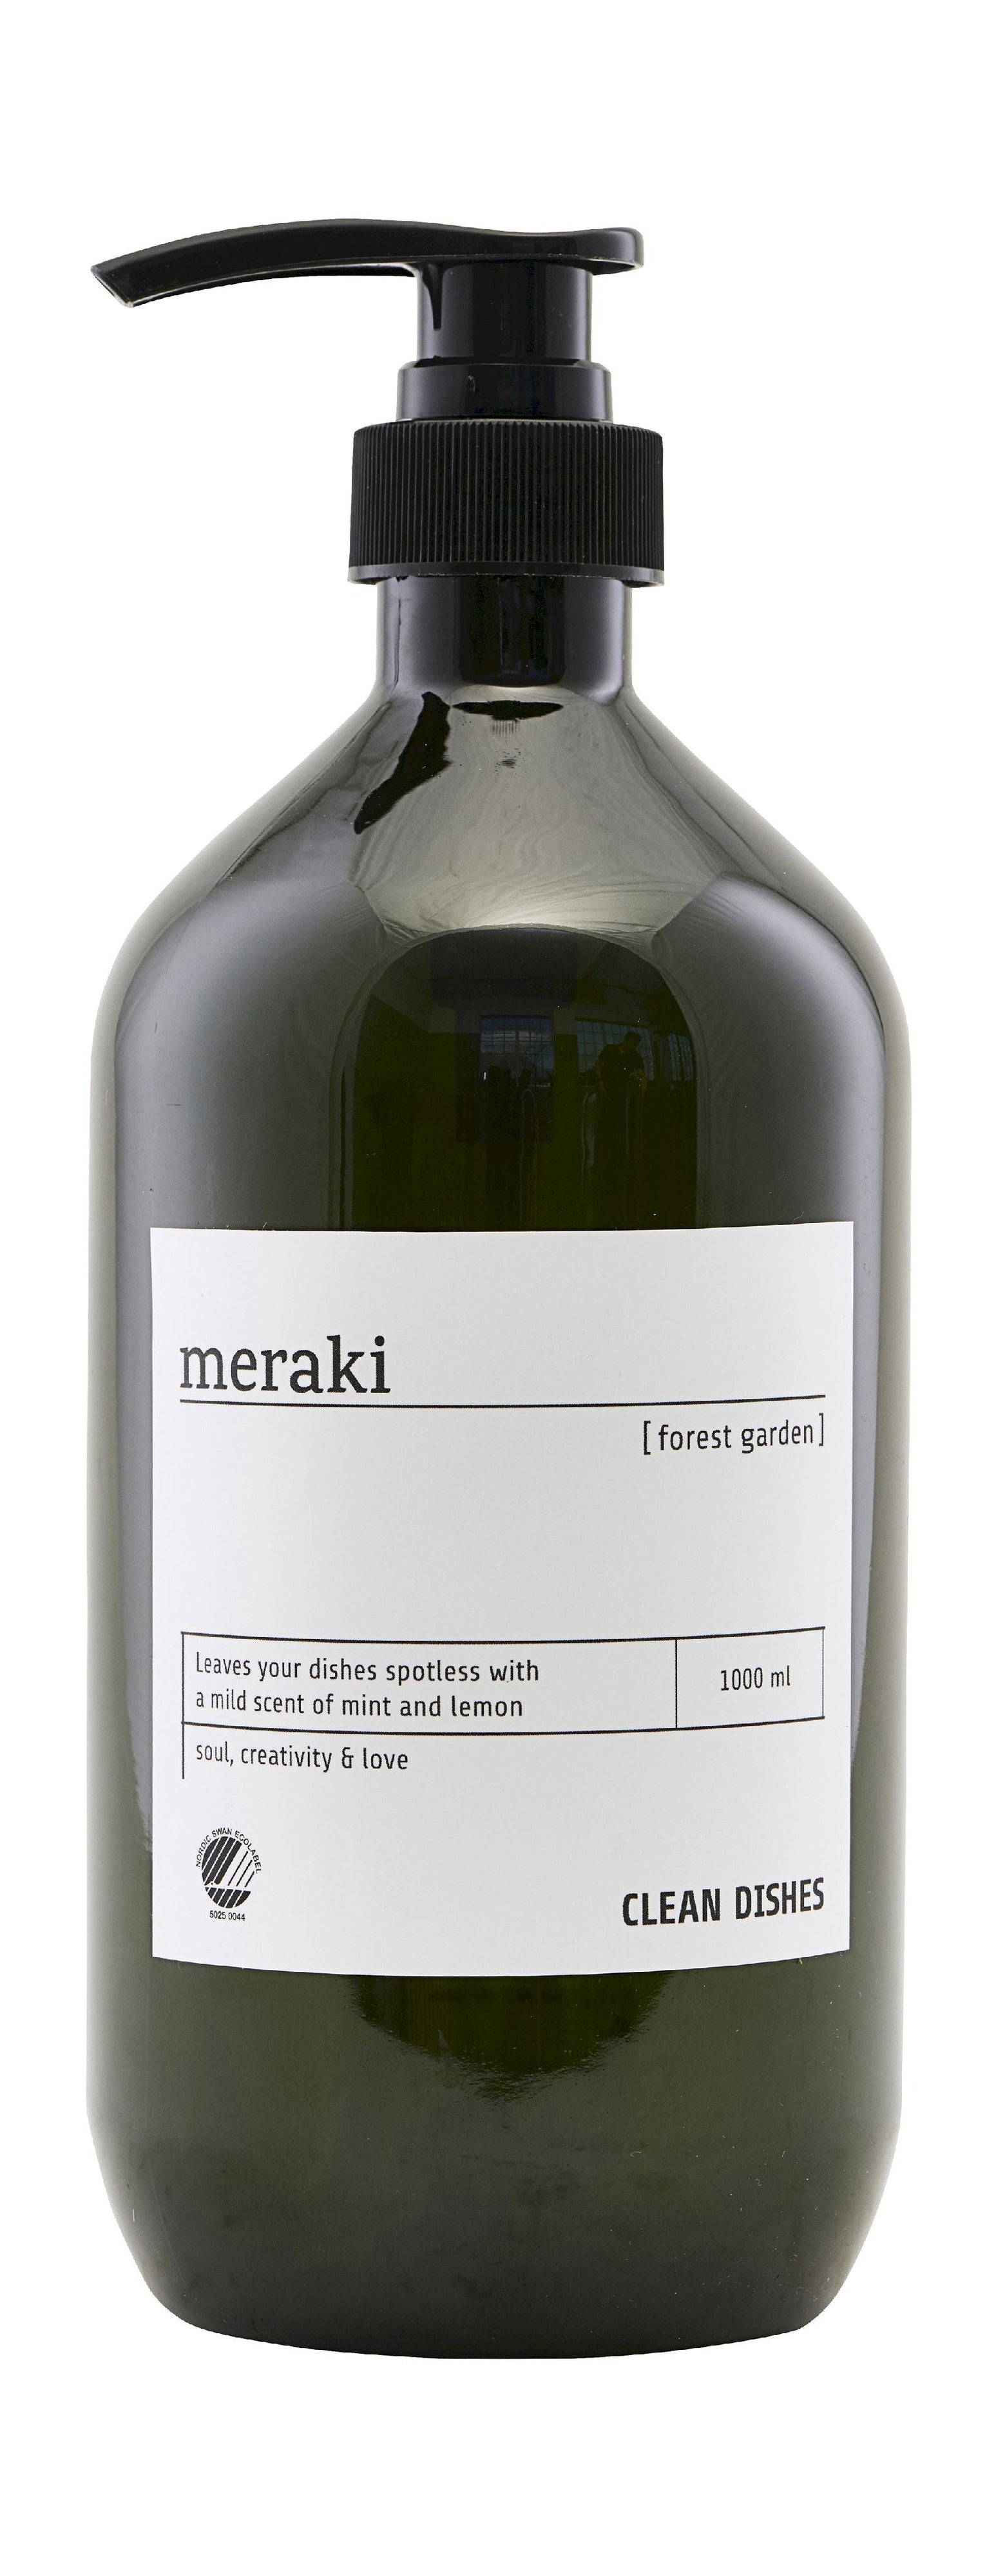 Meraki détergent 1000 ml, jardin forestier